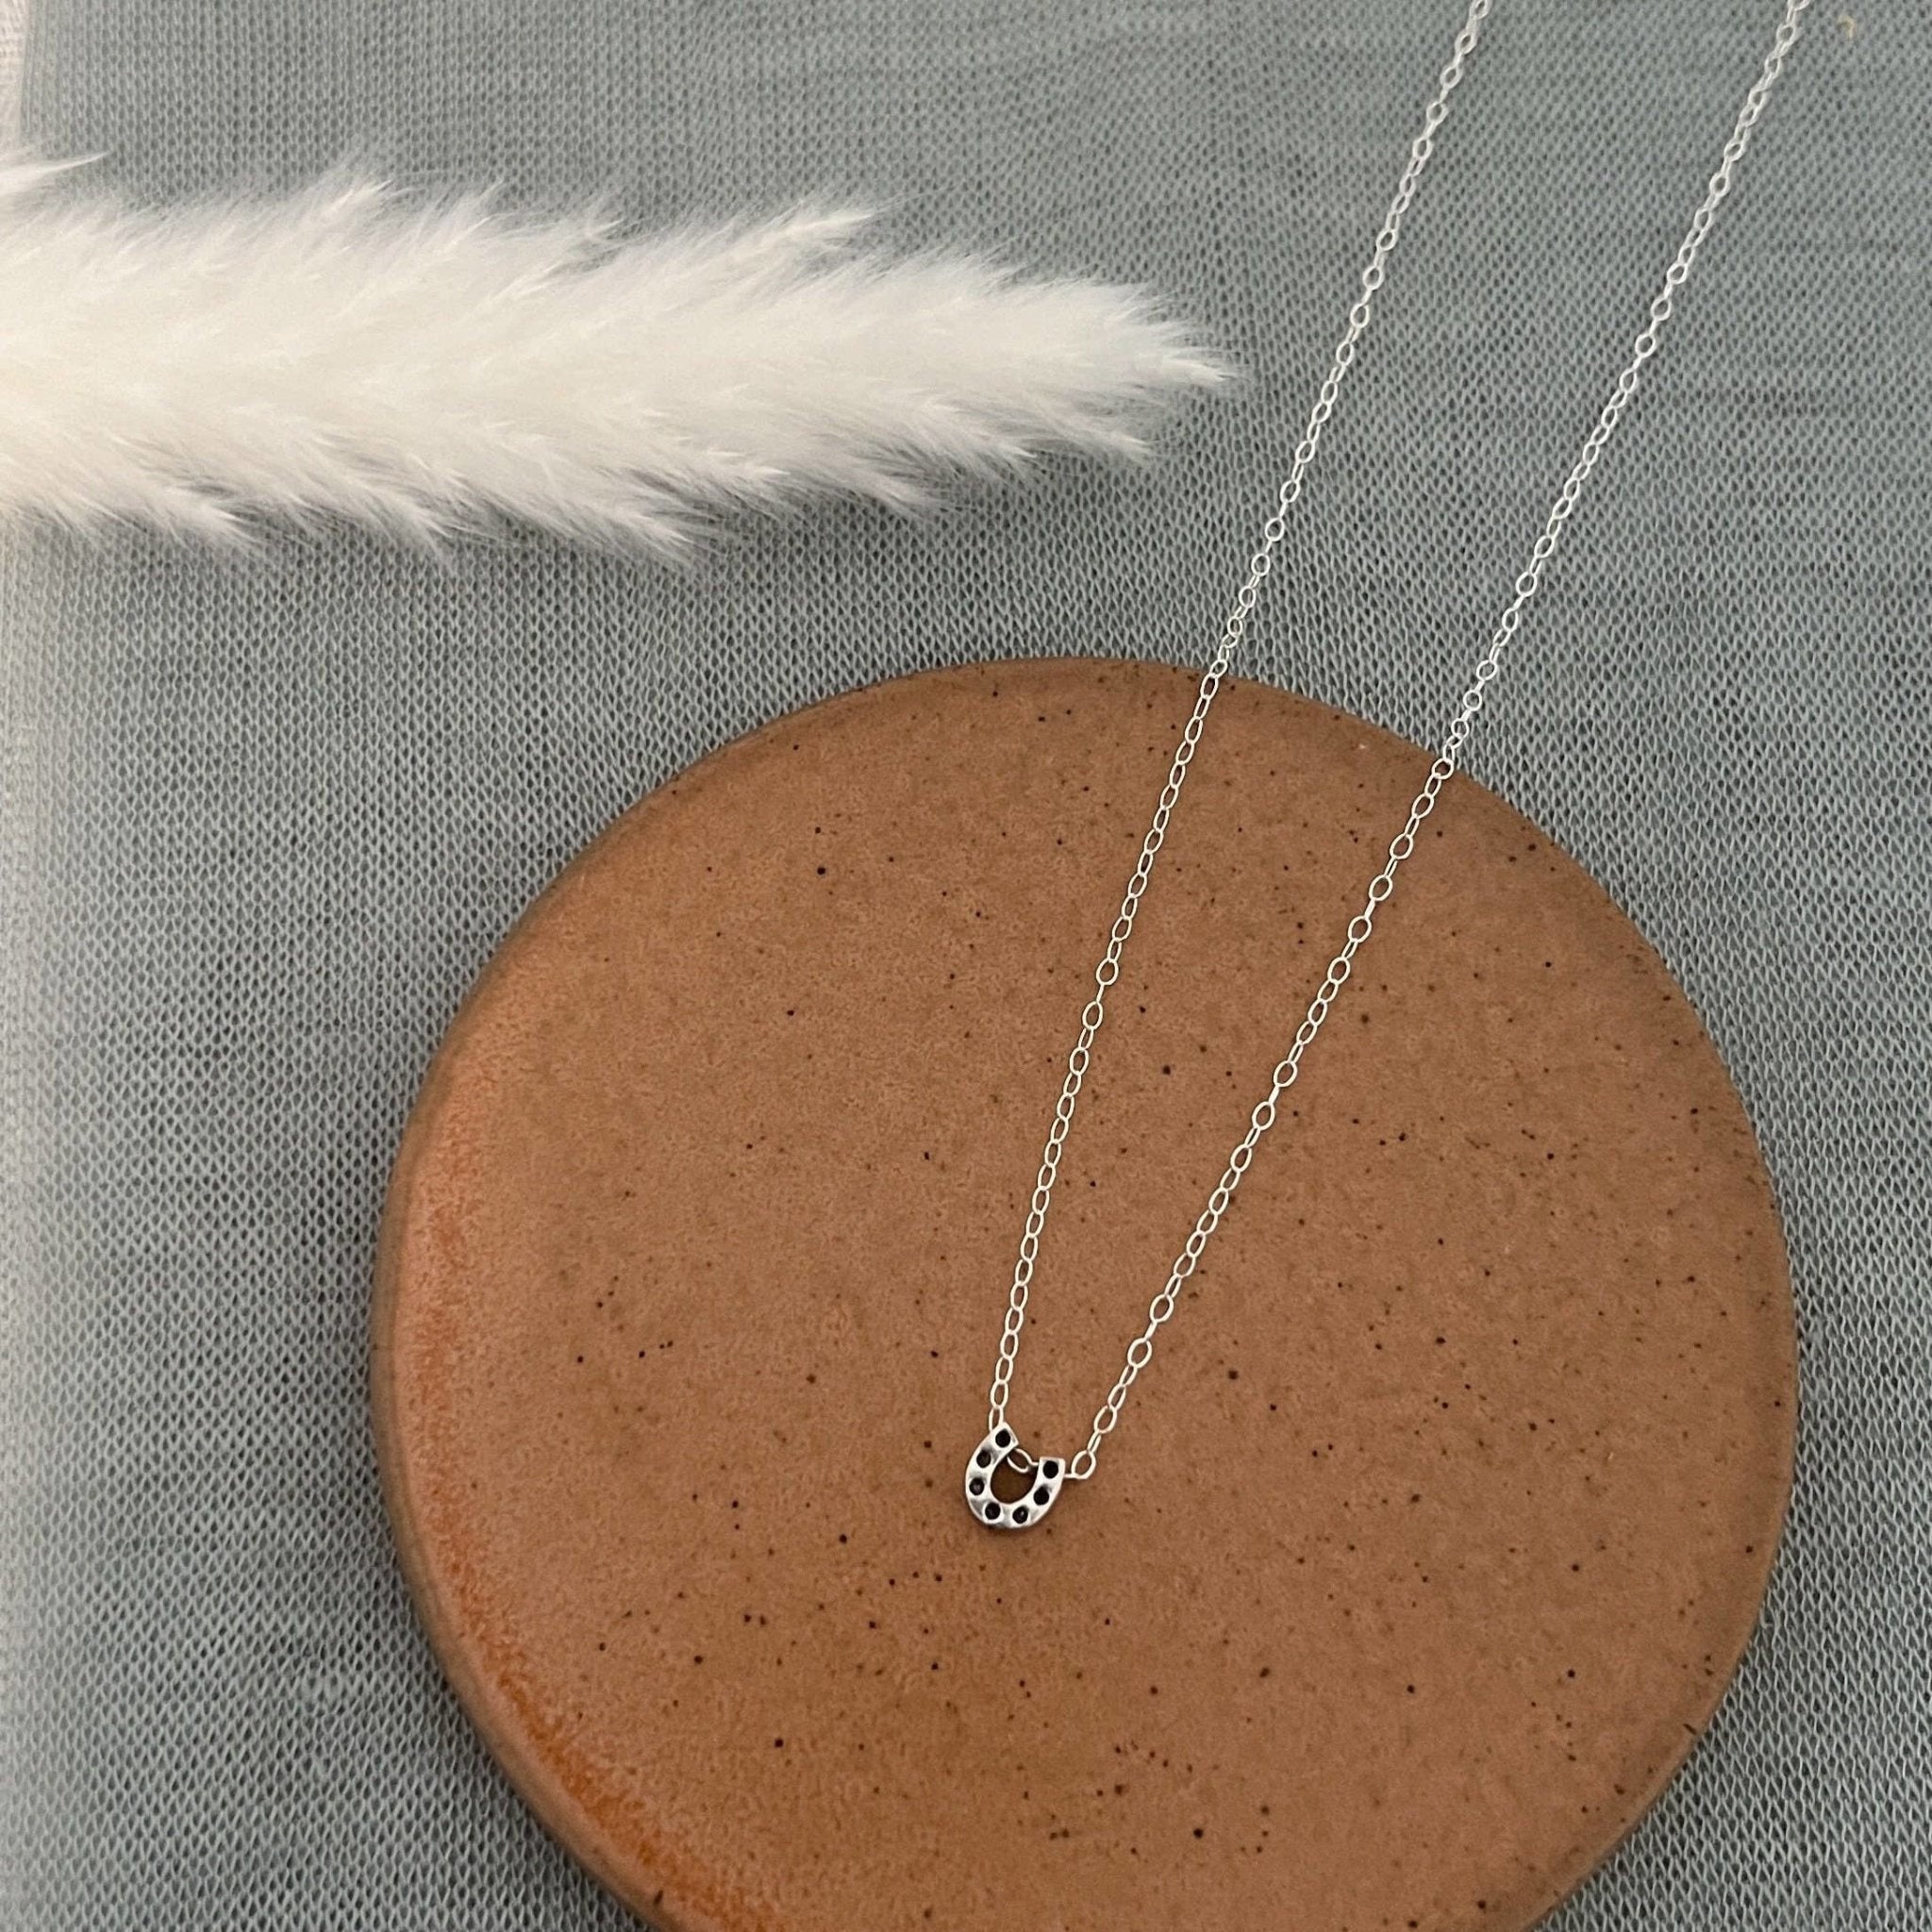 Lucky Horseshoe Necklace, Slide - Sterling Silver - Sela+Sage - Pendant/Charm Necklace